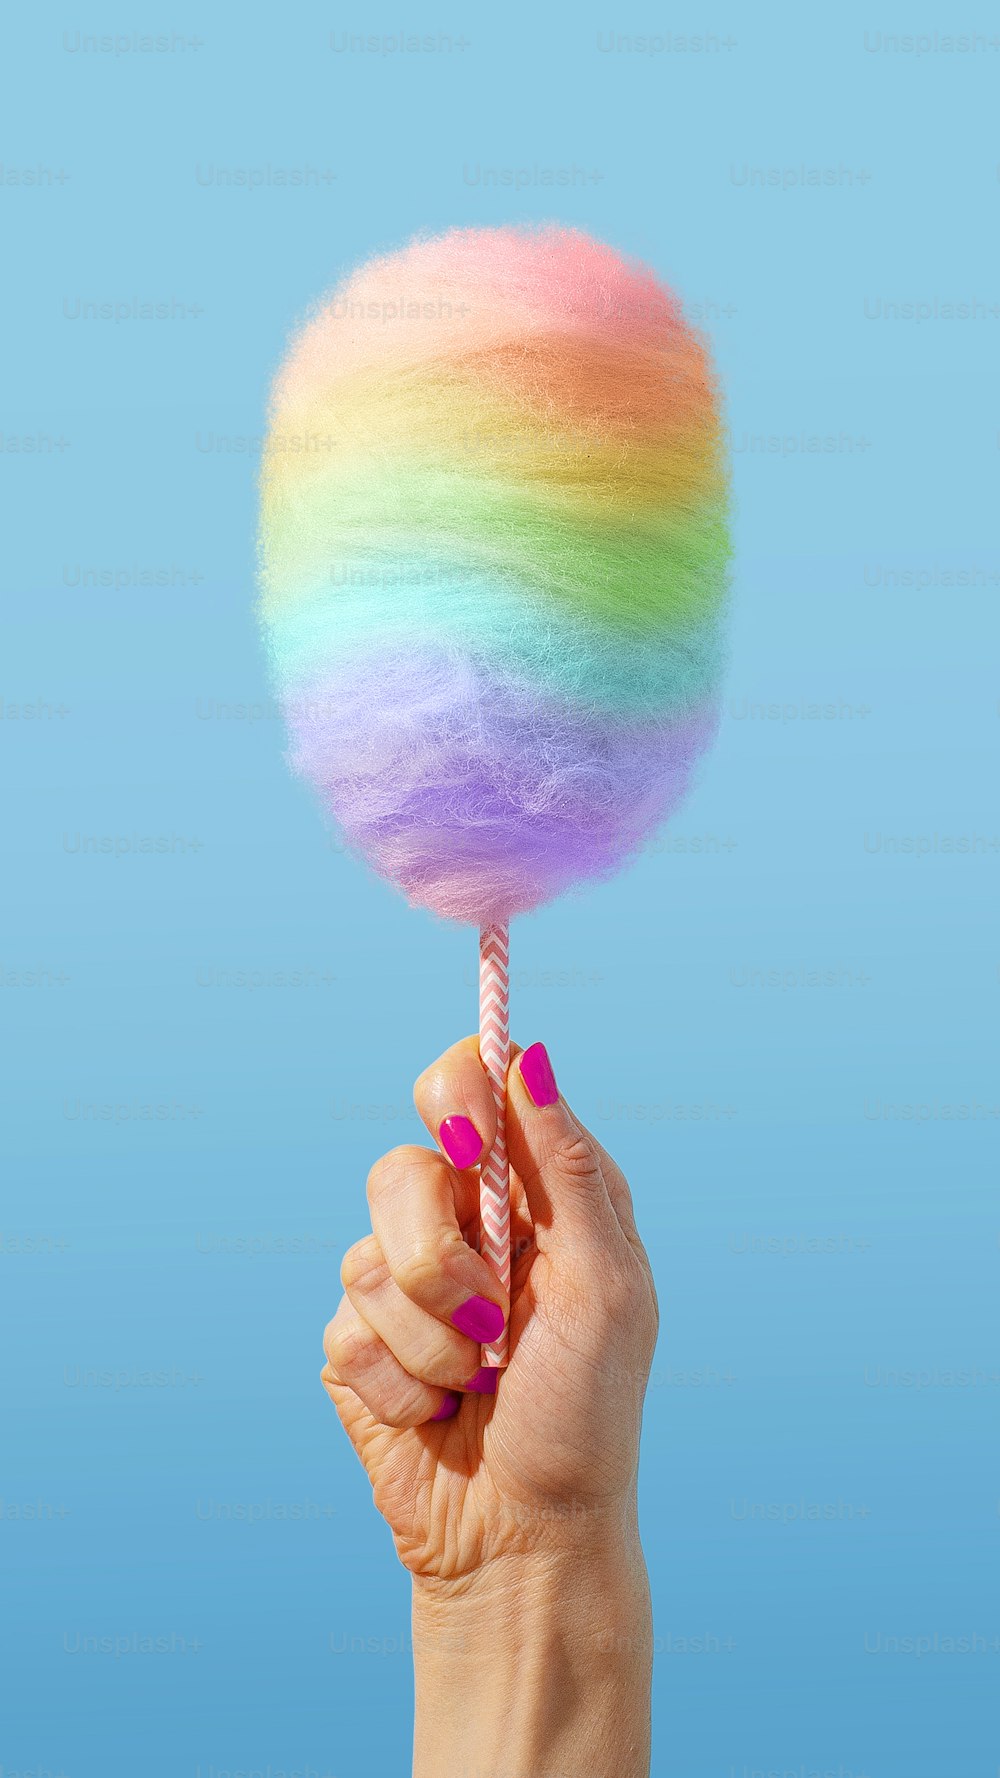 a hand holding a rainbow lollipop on a stick